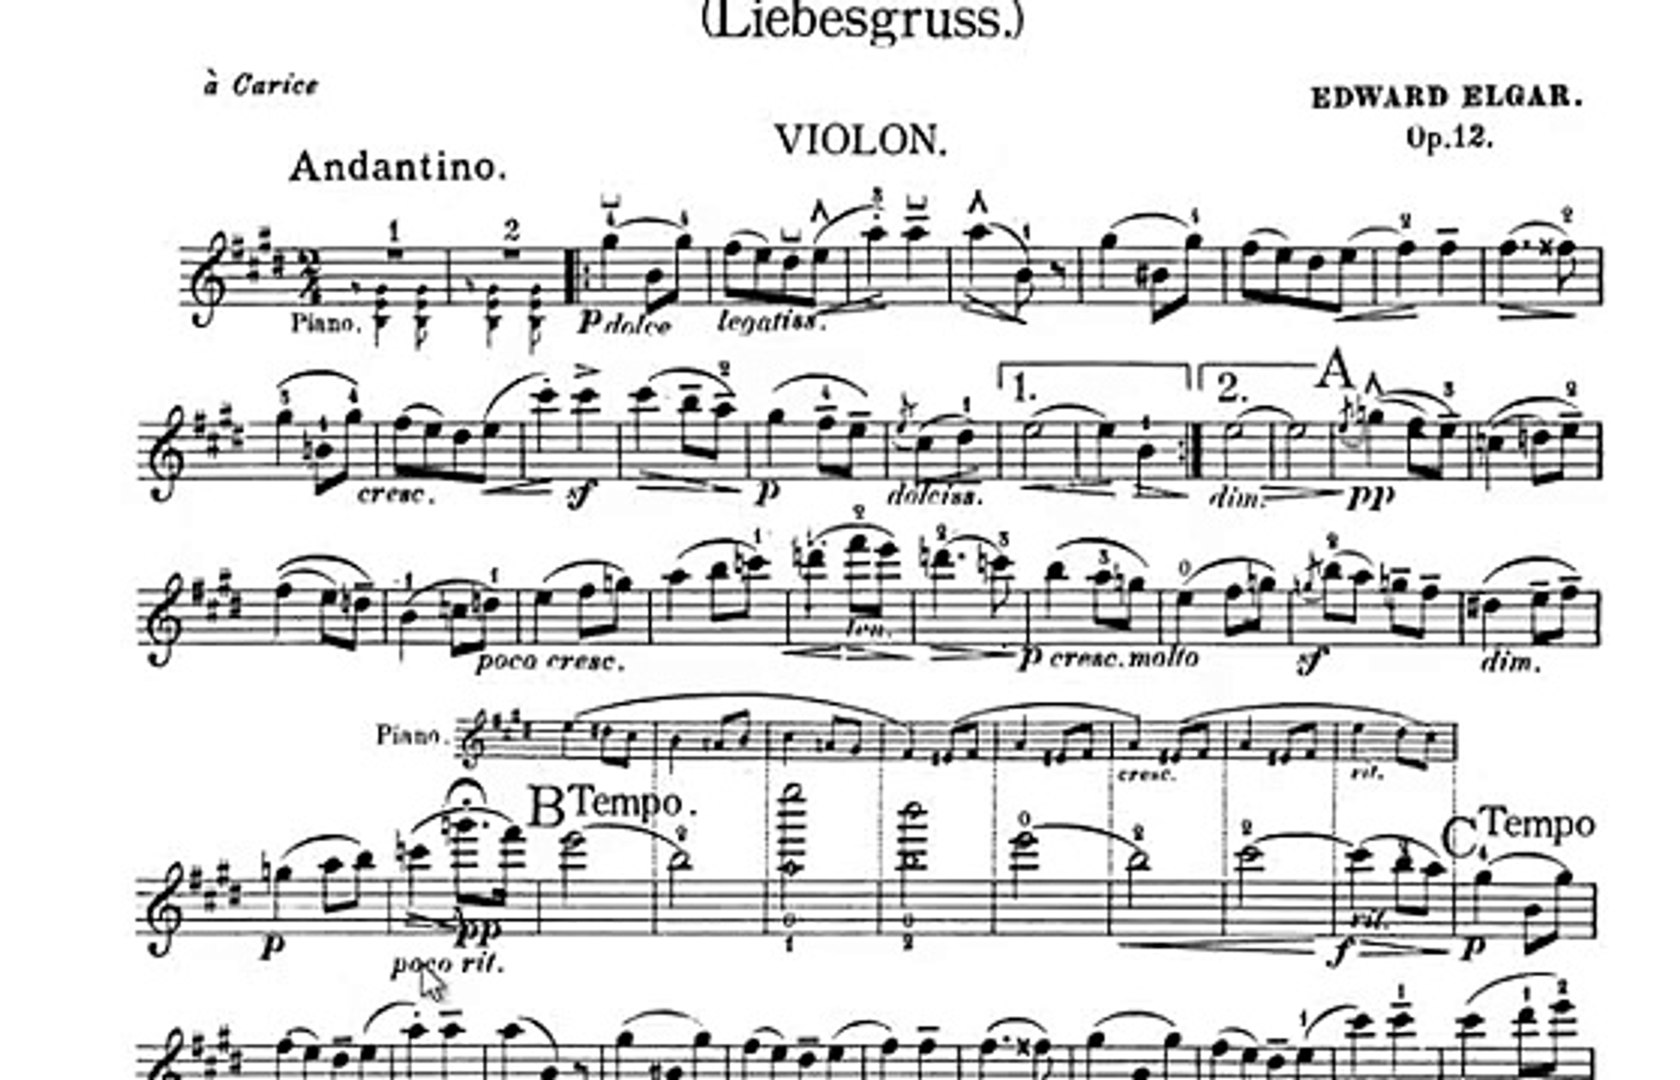 Salut D'amour, Op. 12 - Edward Elgar violin sheet music - video Dailymotion